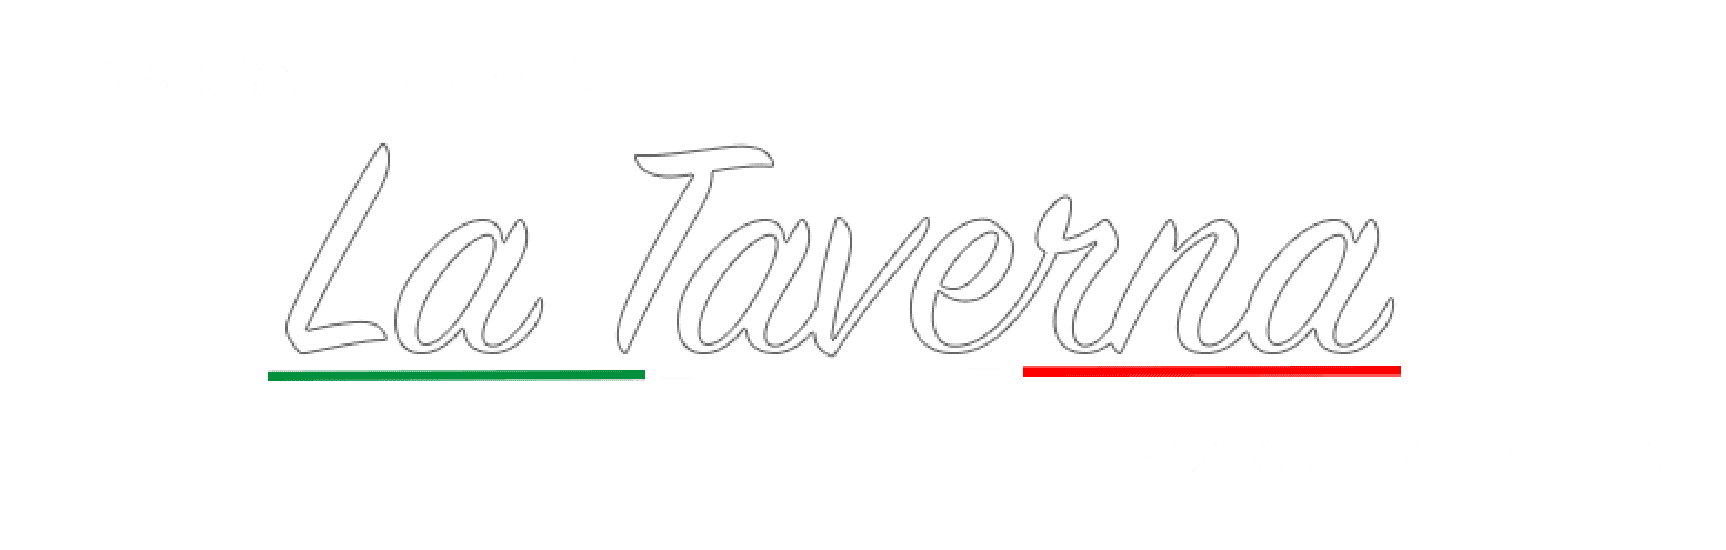 Pizzeria La Taverna logo